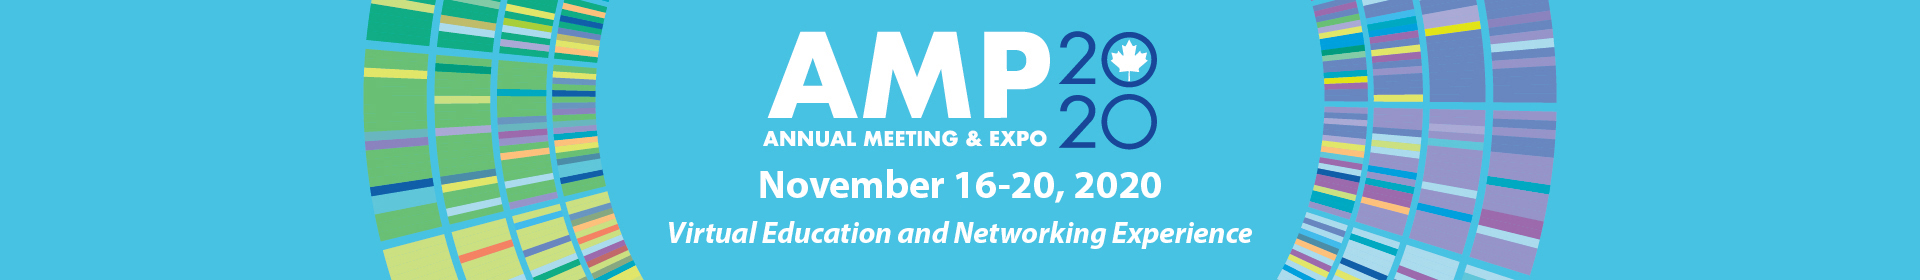 AMP 2020 Event Banner